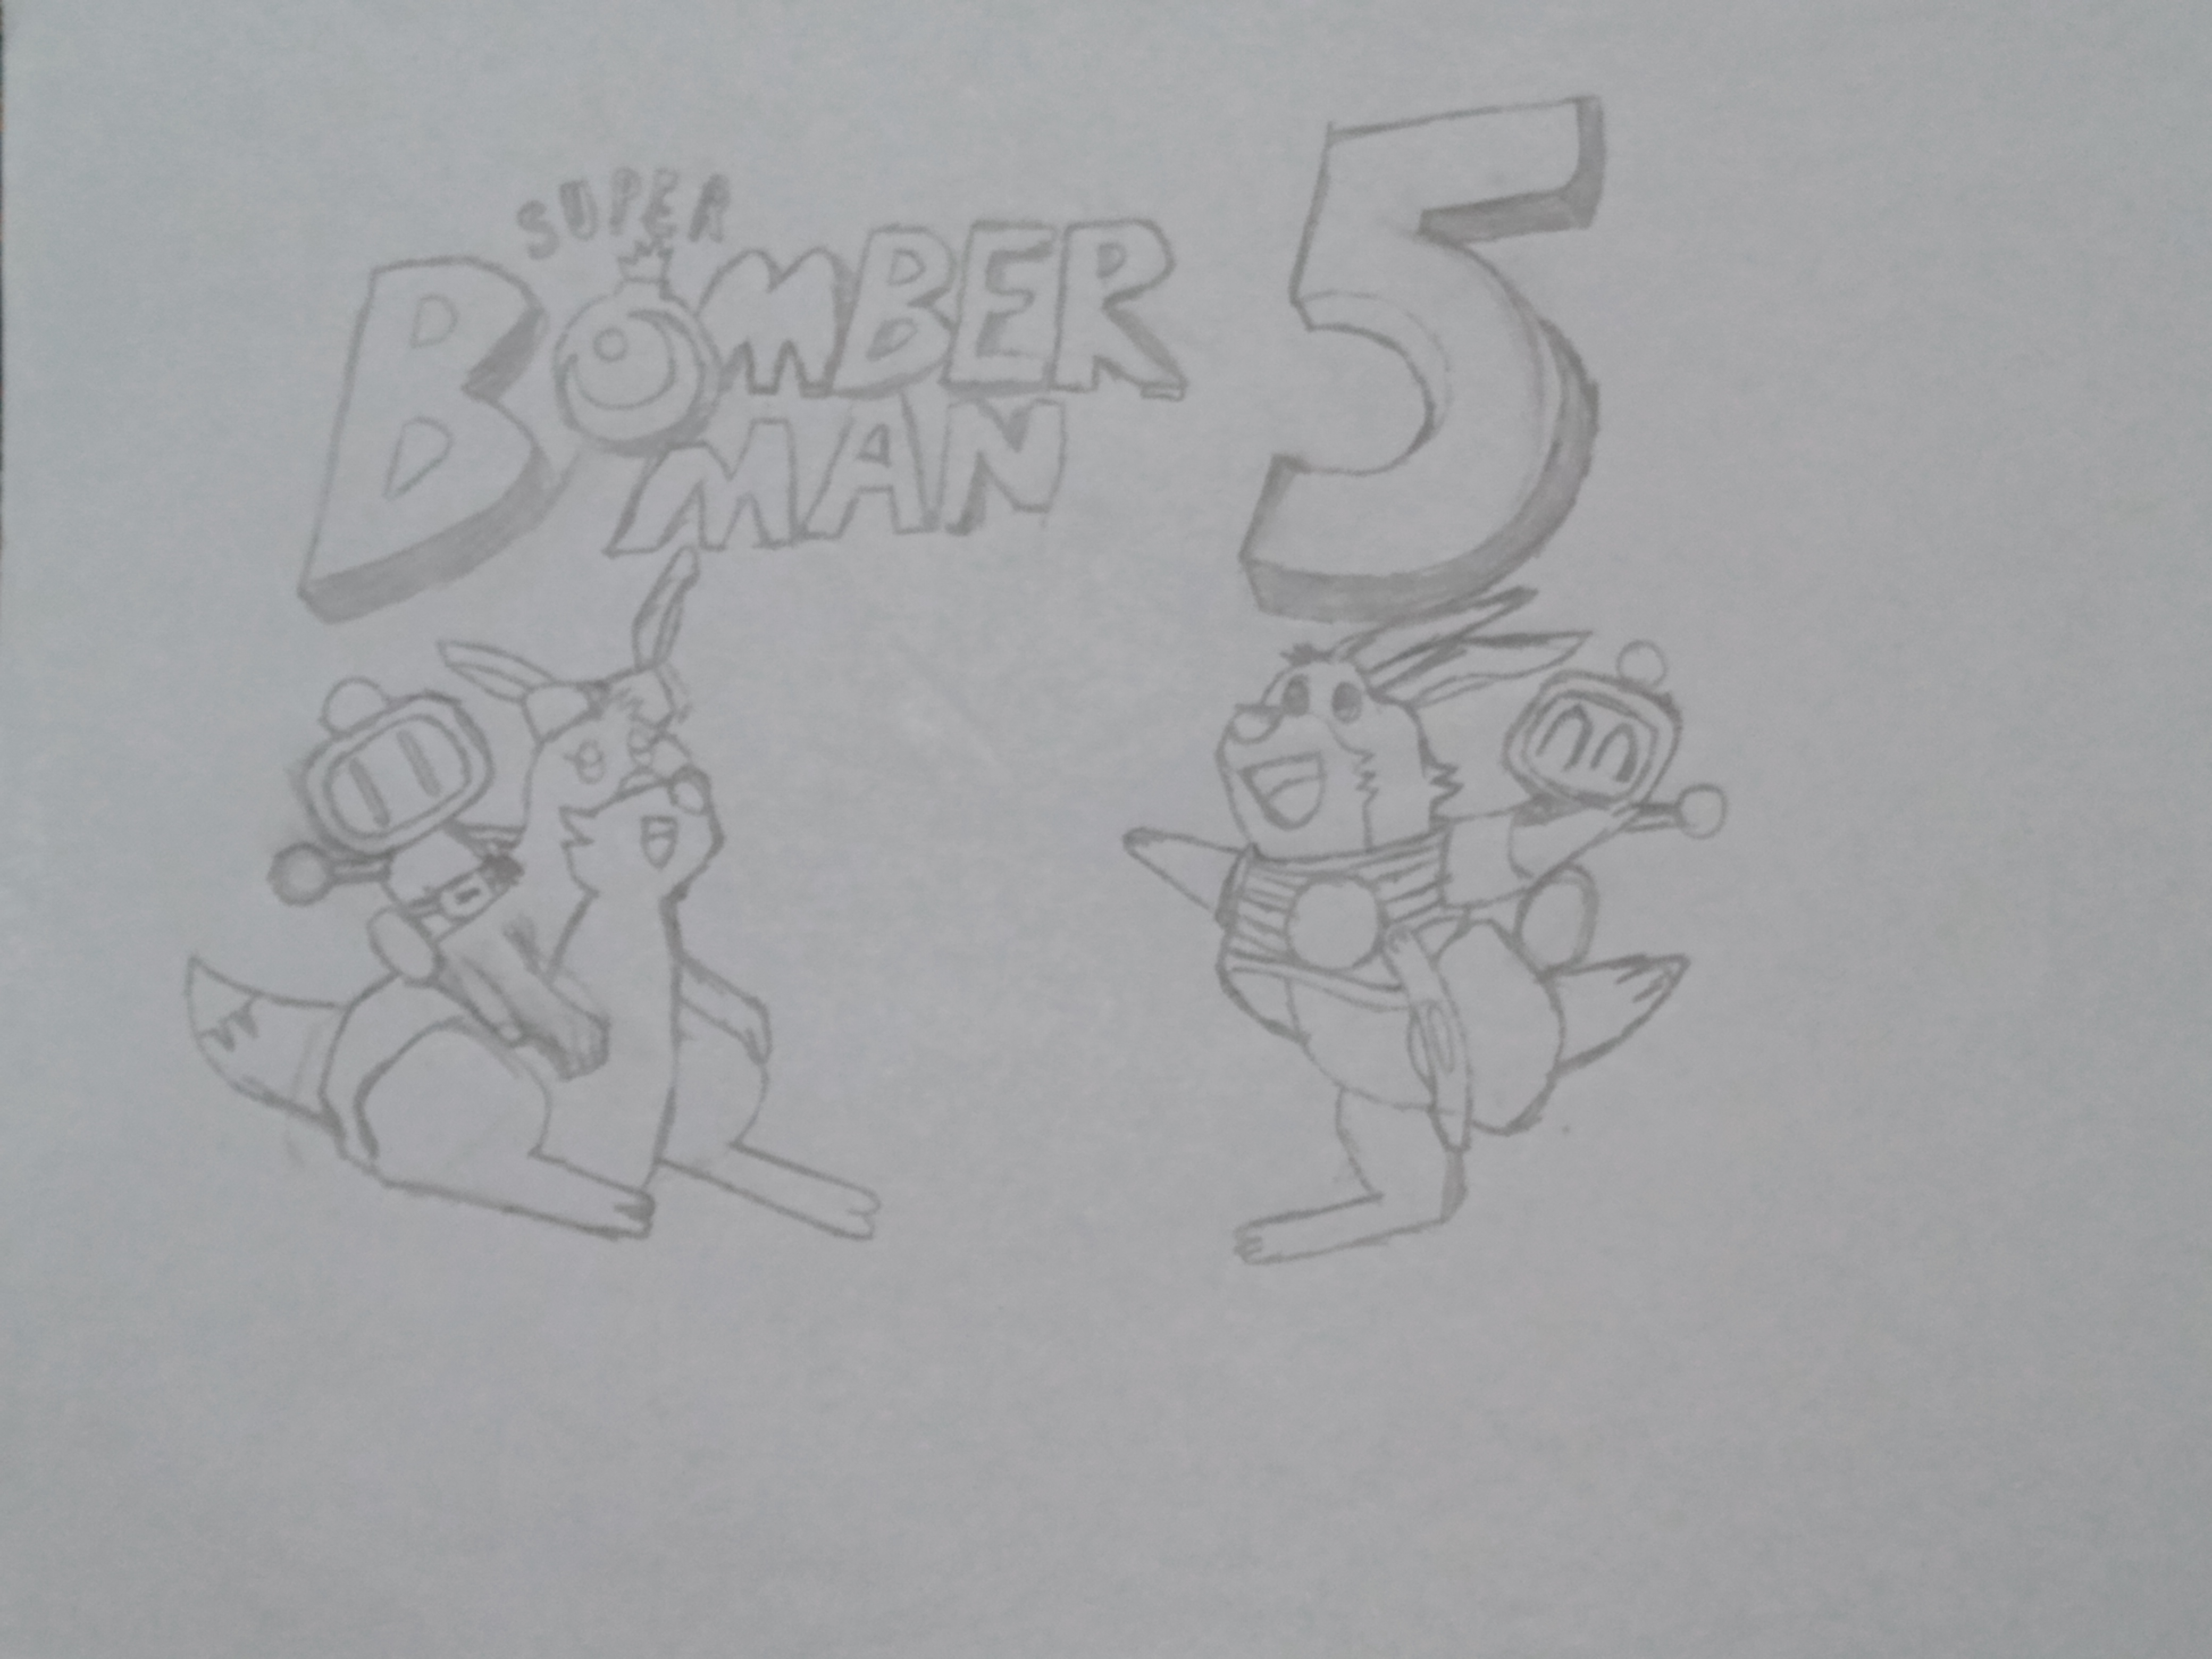 Super Bomberman 5 Guide by lunchymunchies on DeviantArt